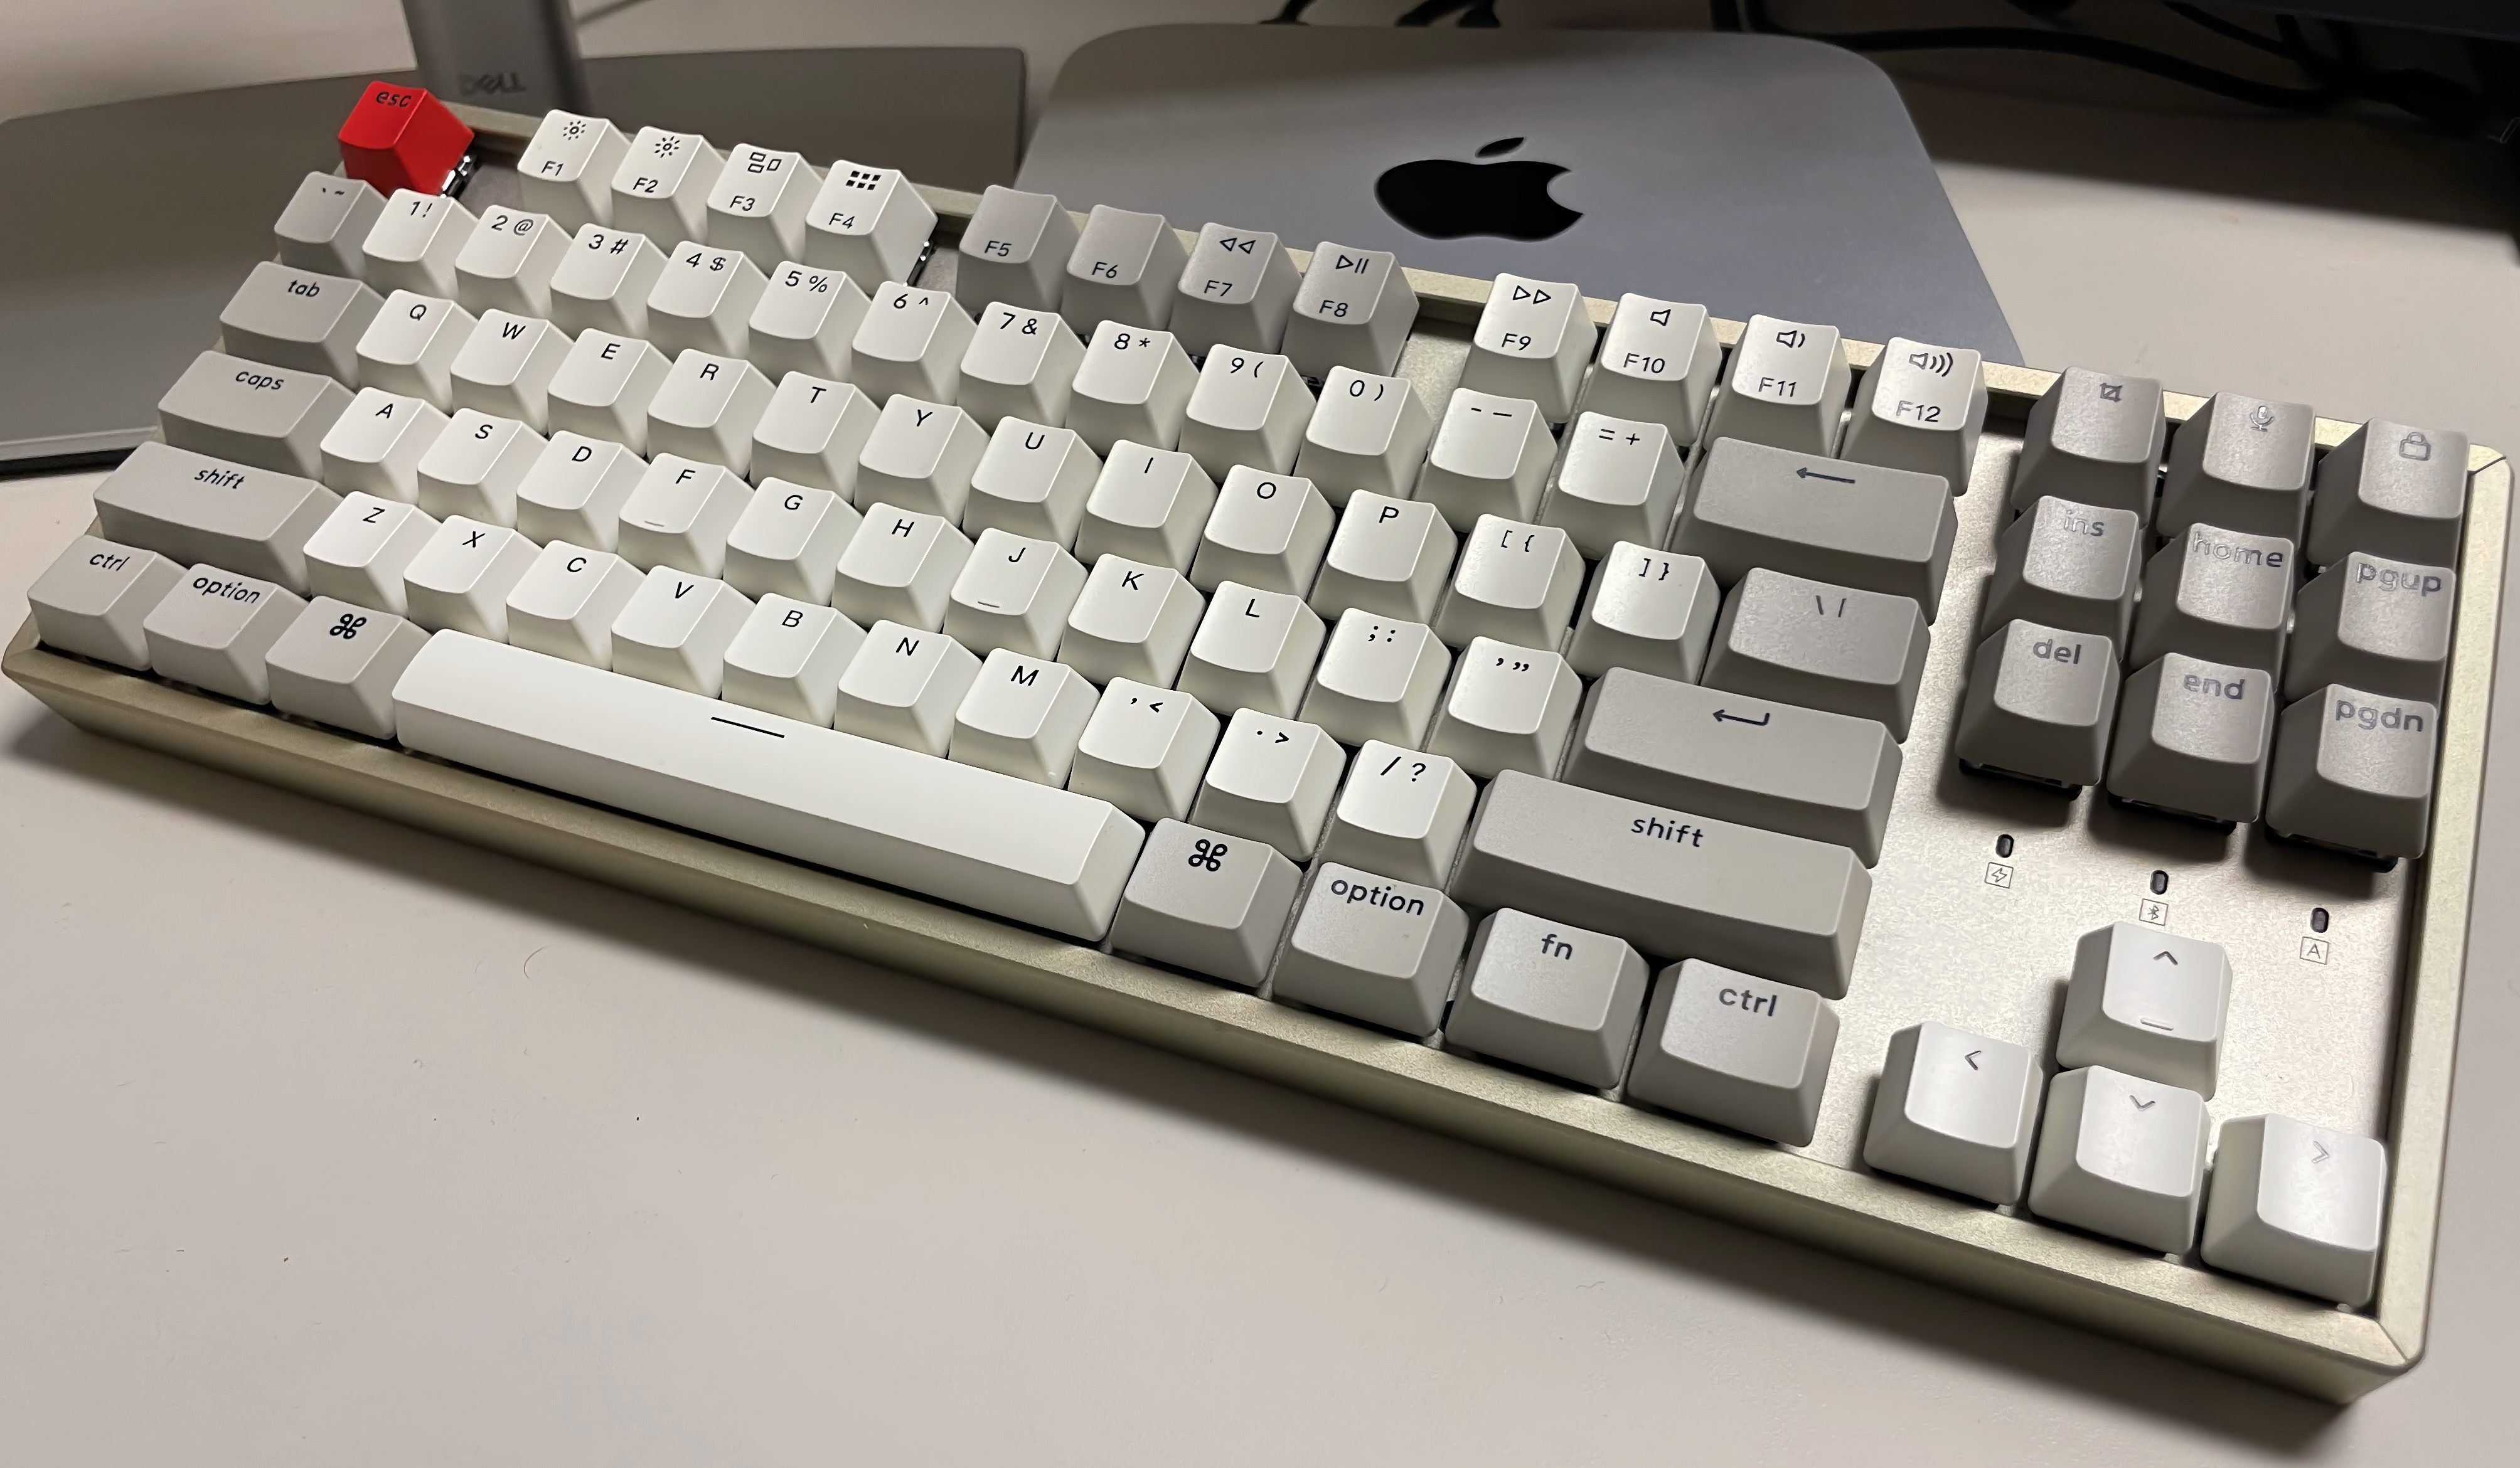 Keychron K8-87 Mechanical Keyboard – My First Mechanical Keyboard